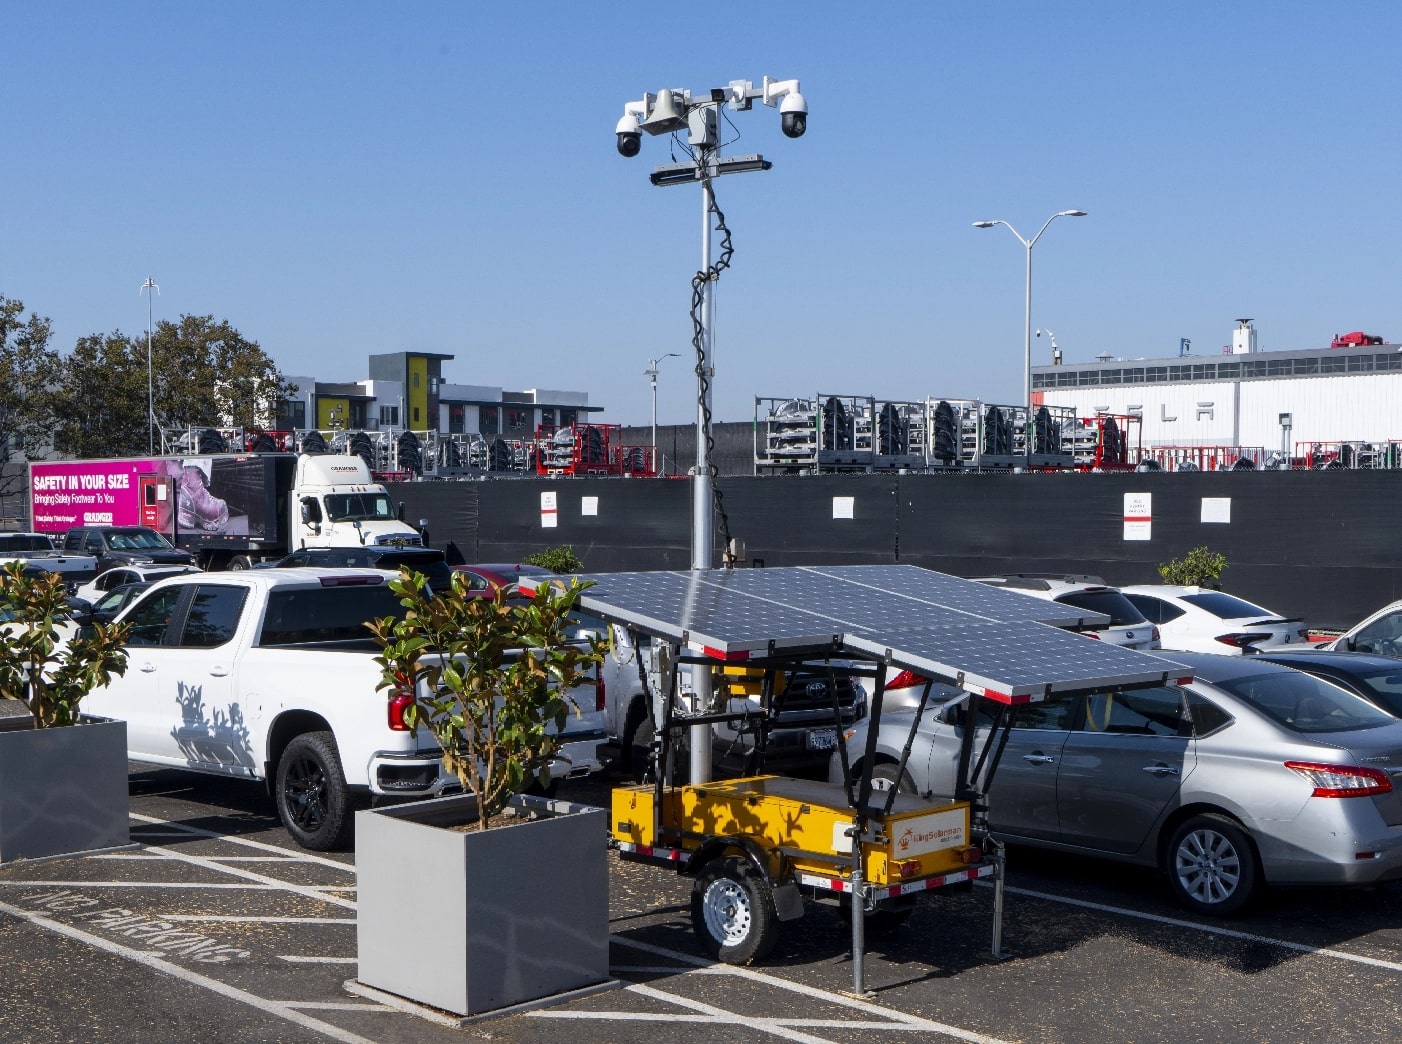 Solar-powered lighting in parking lot